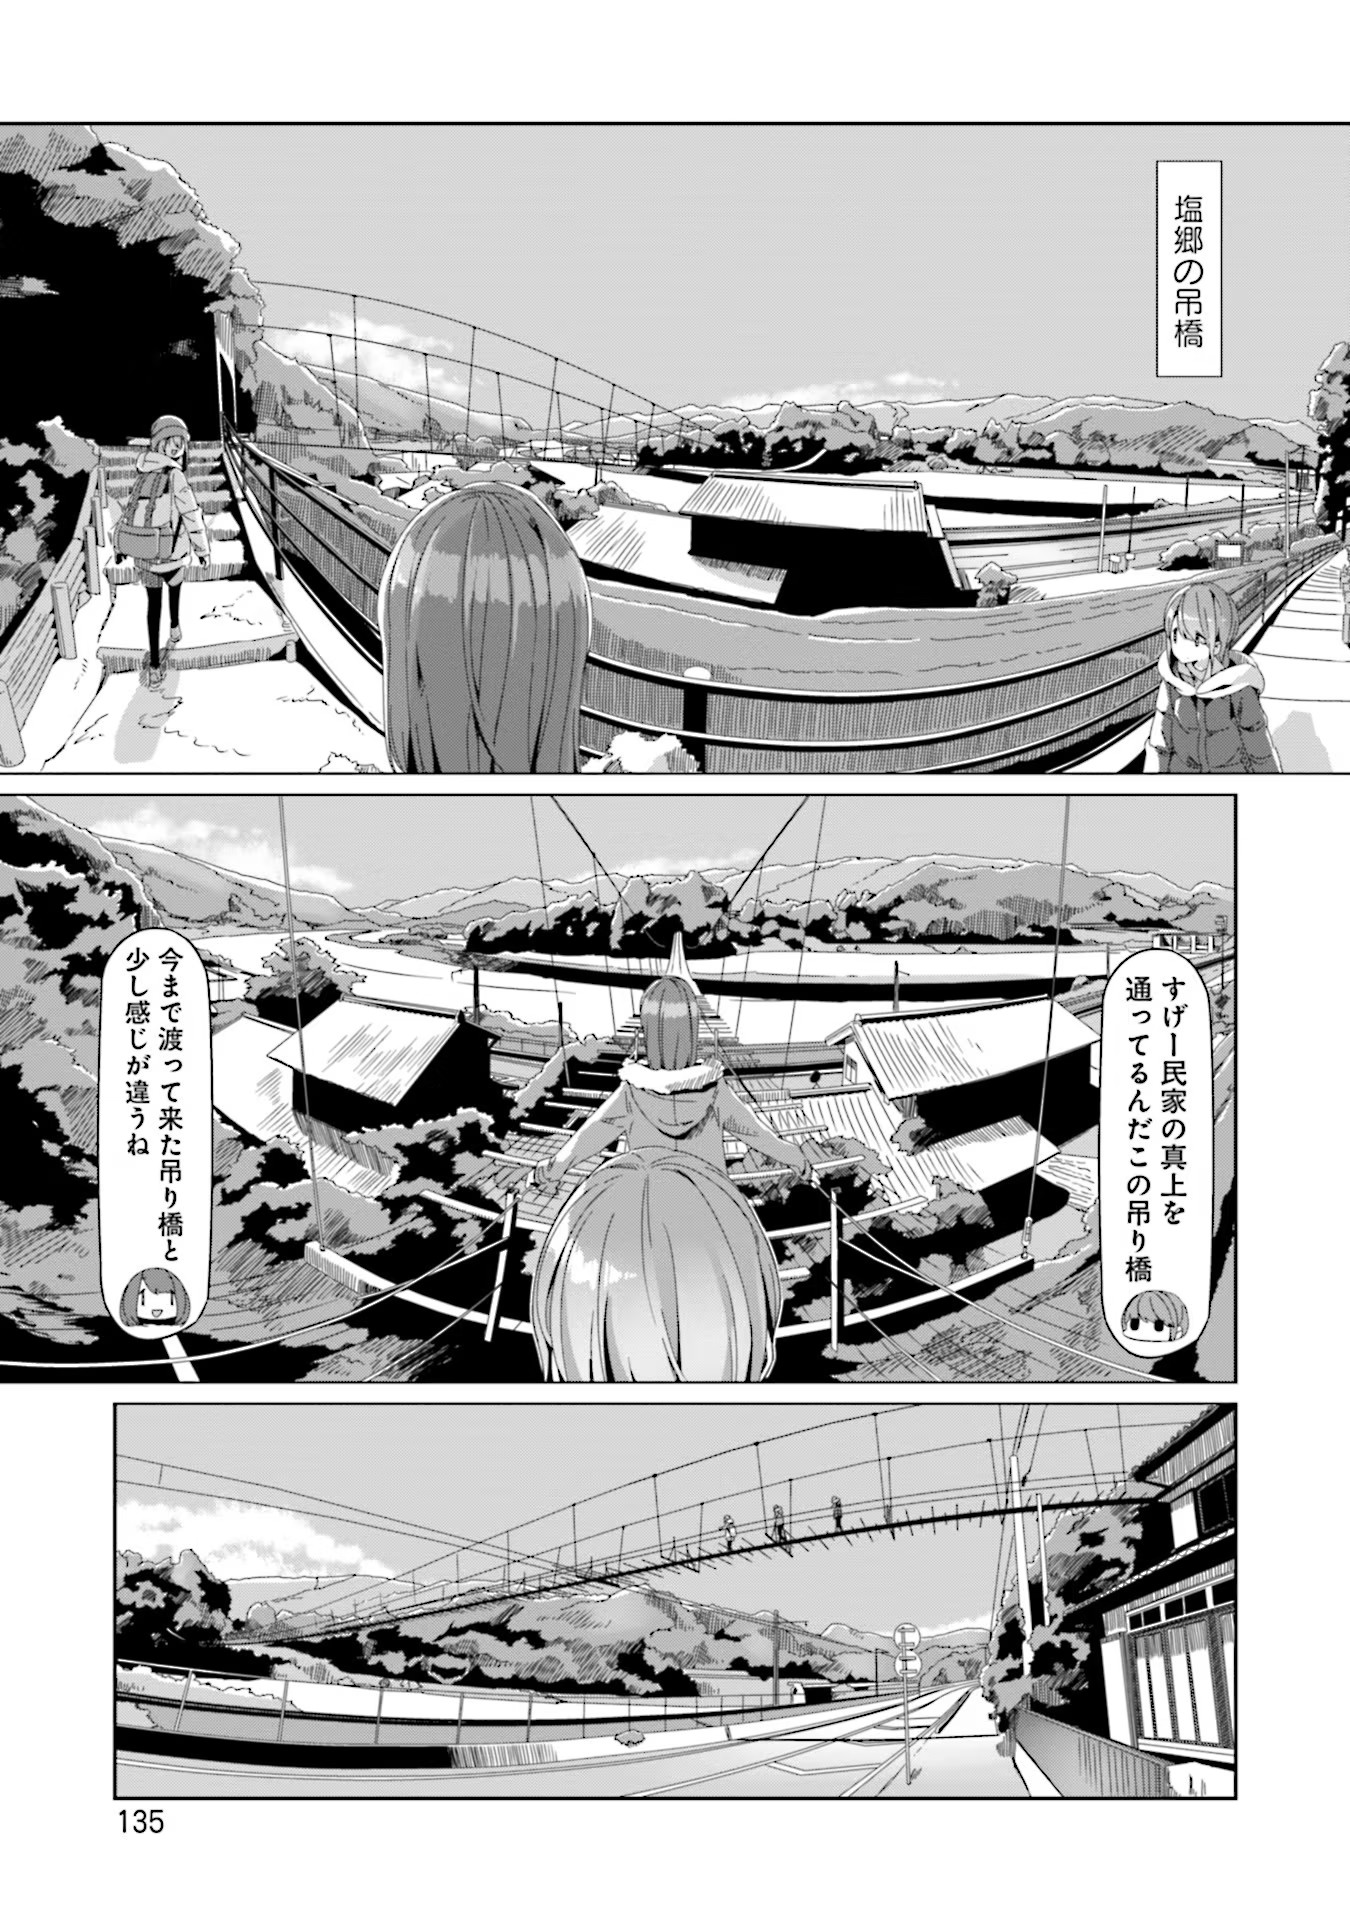 Yuru Camp - Chapter 63 - Page 3